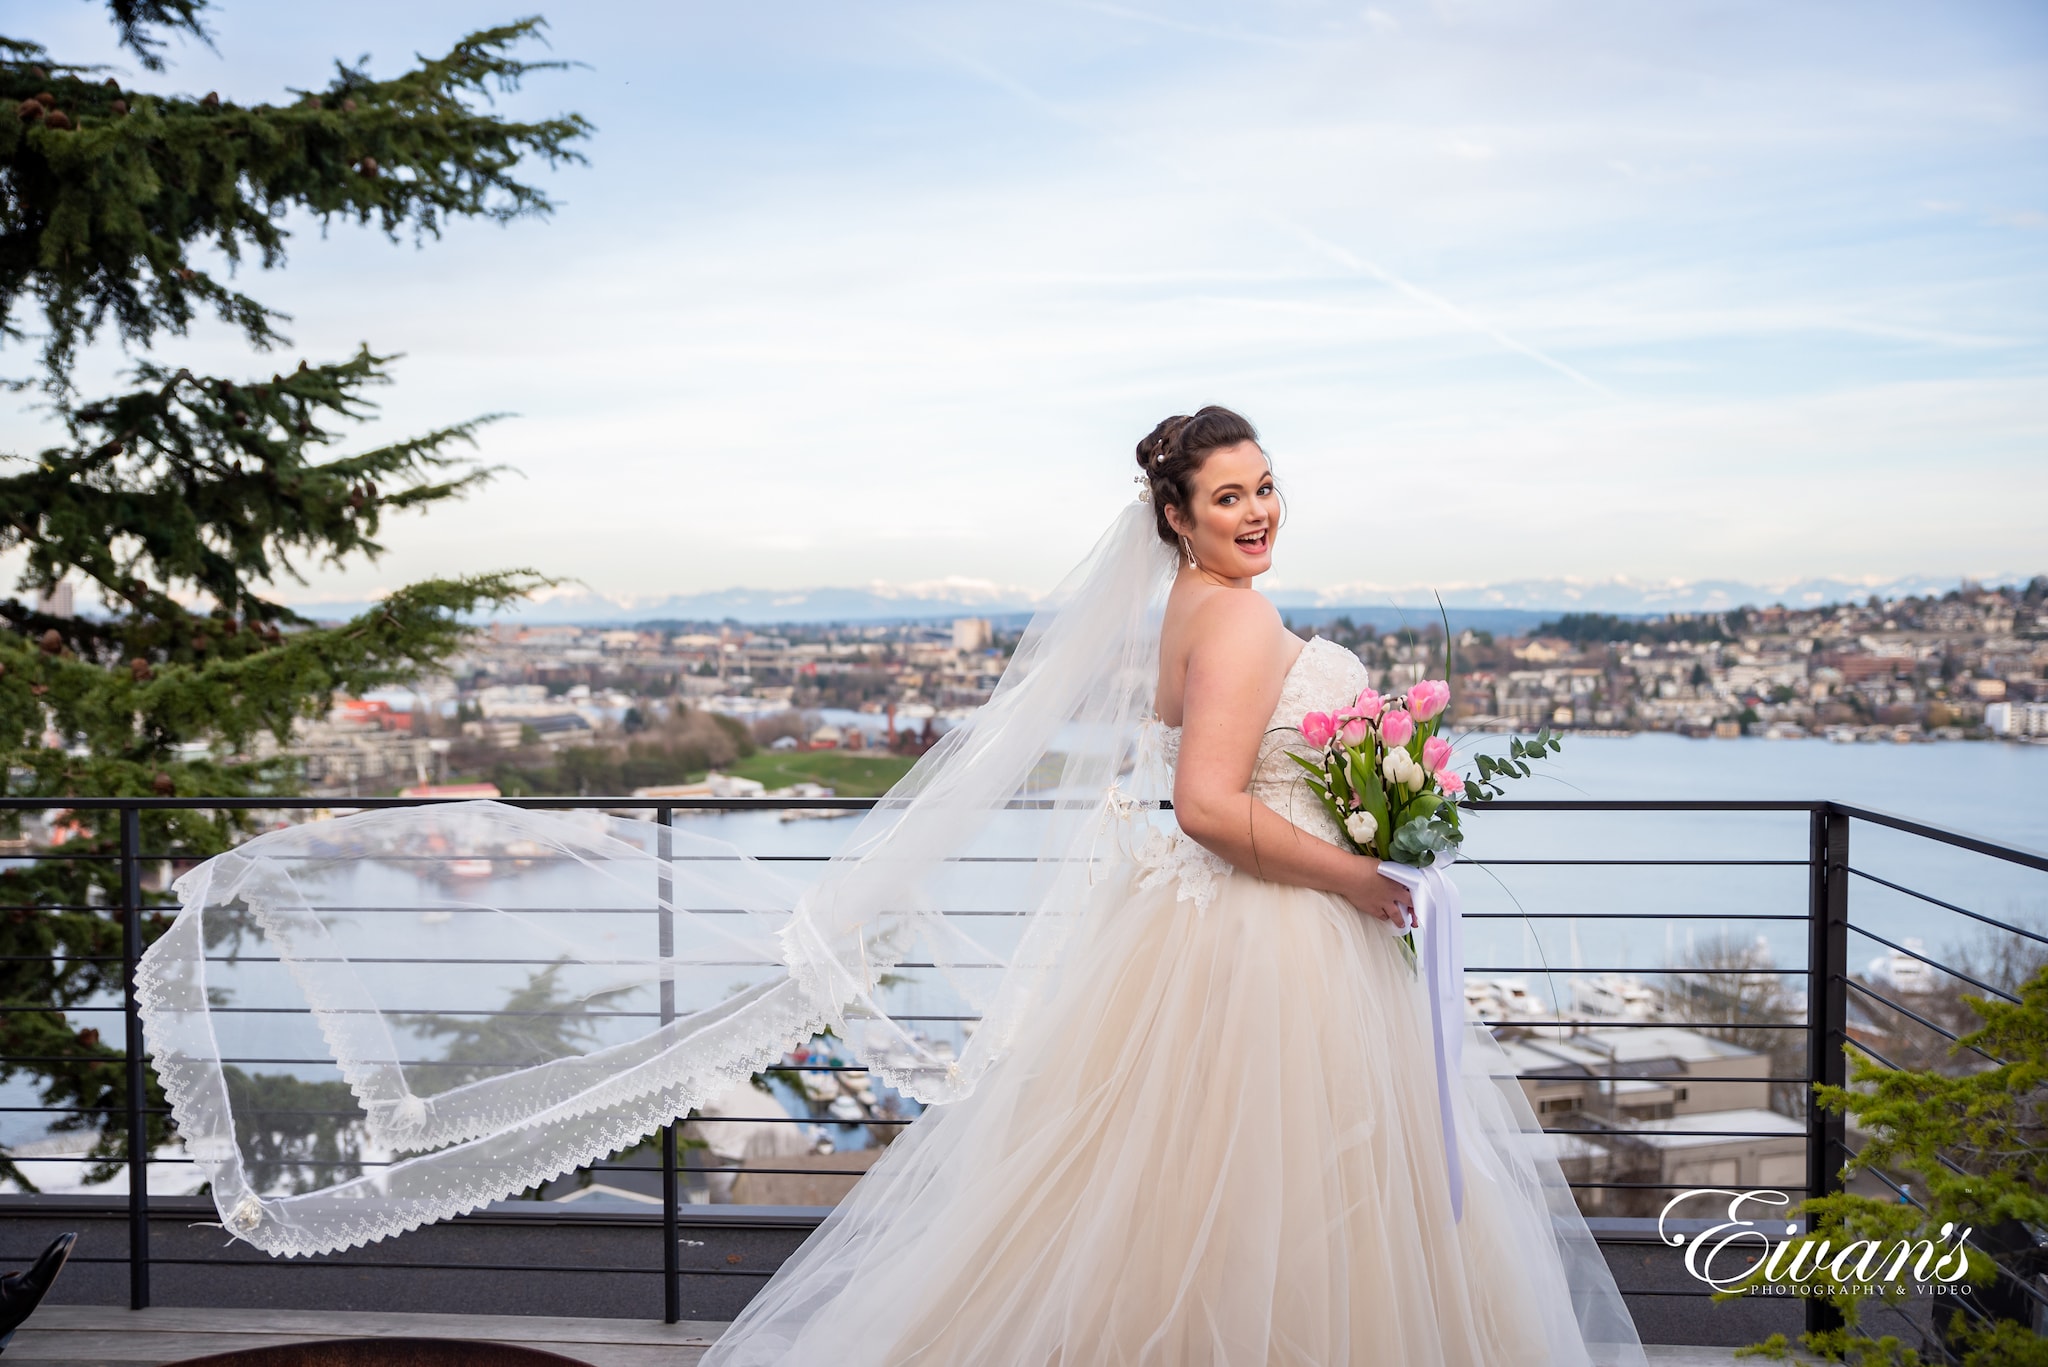 woman in white wedding dress standing on bridge during daytime